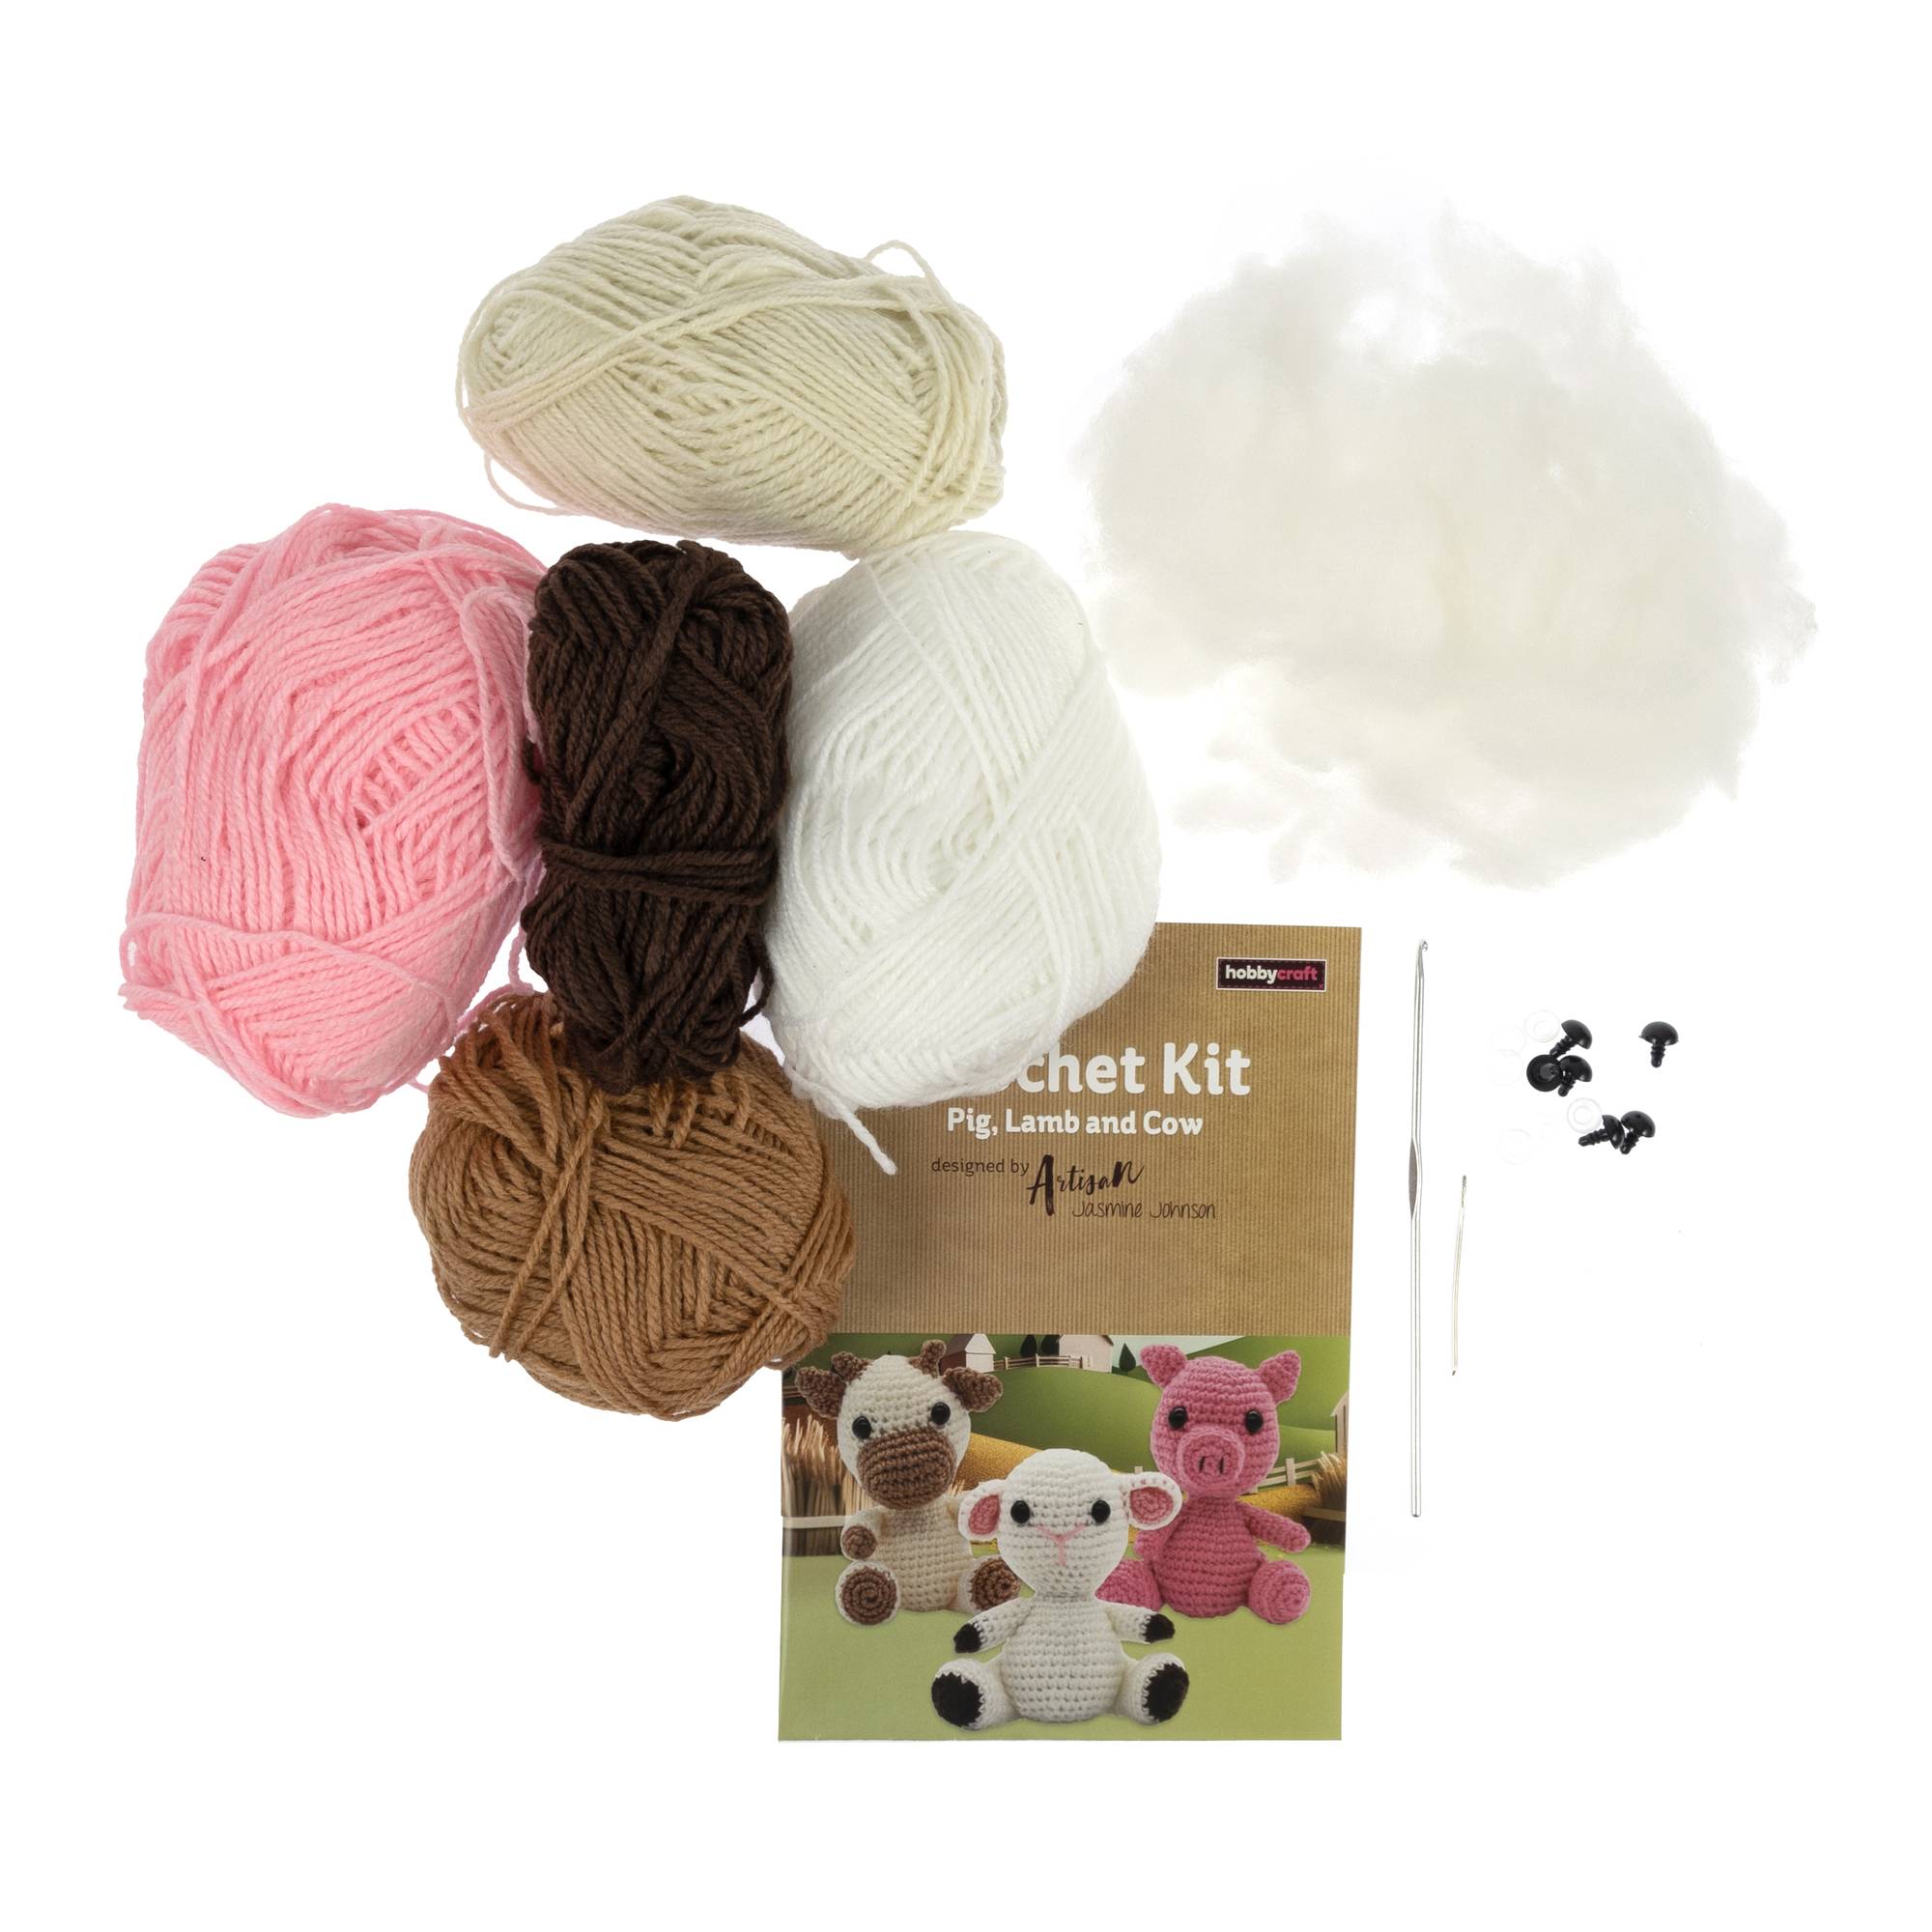 Artisan Pig, Lamb and Cow Crochet Kit 3 Pack